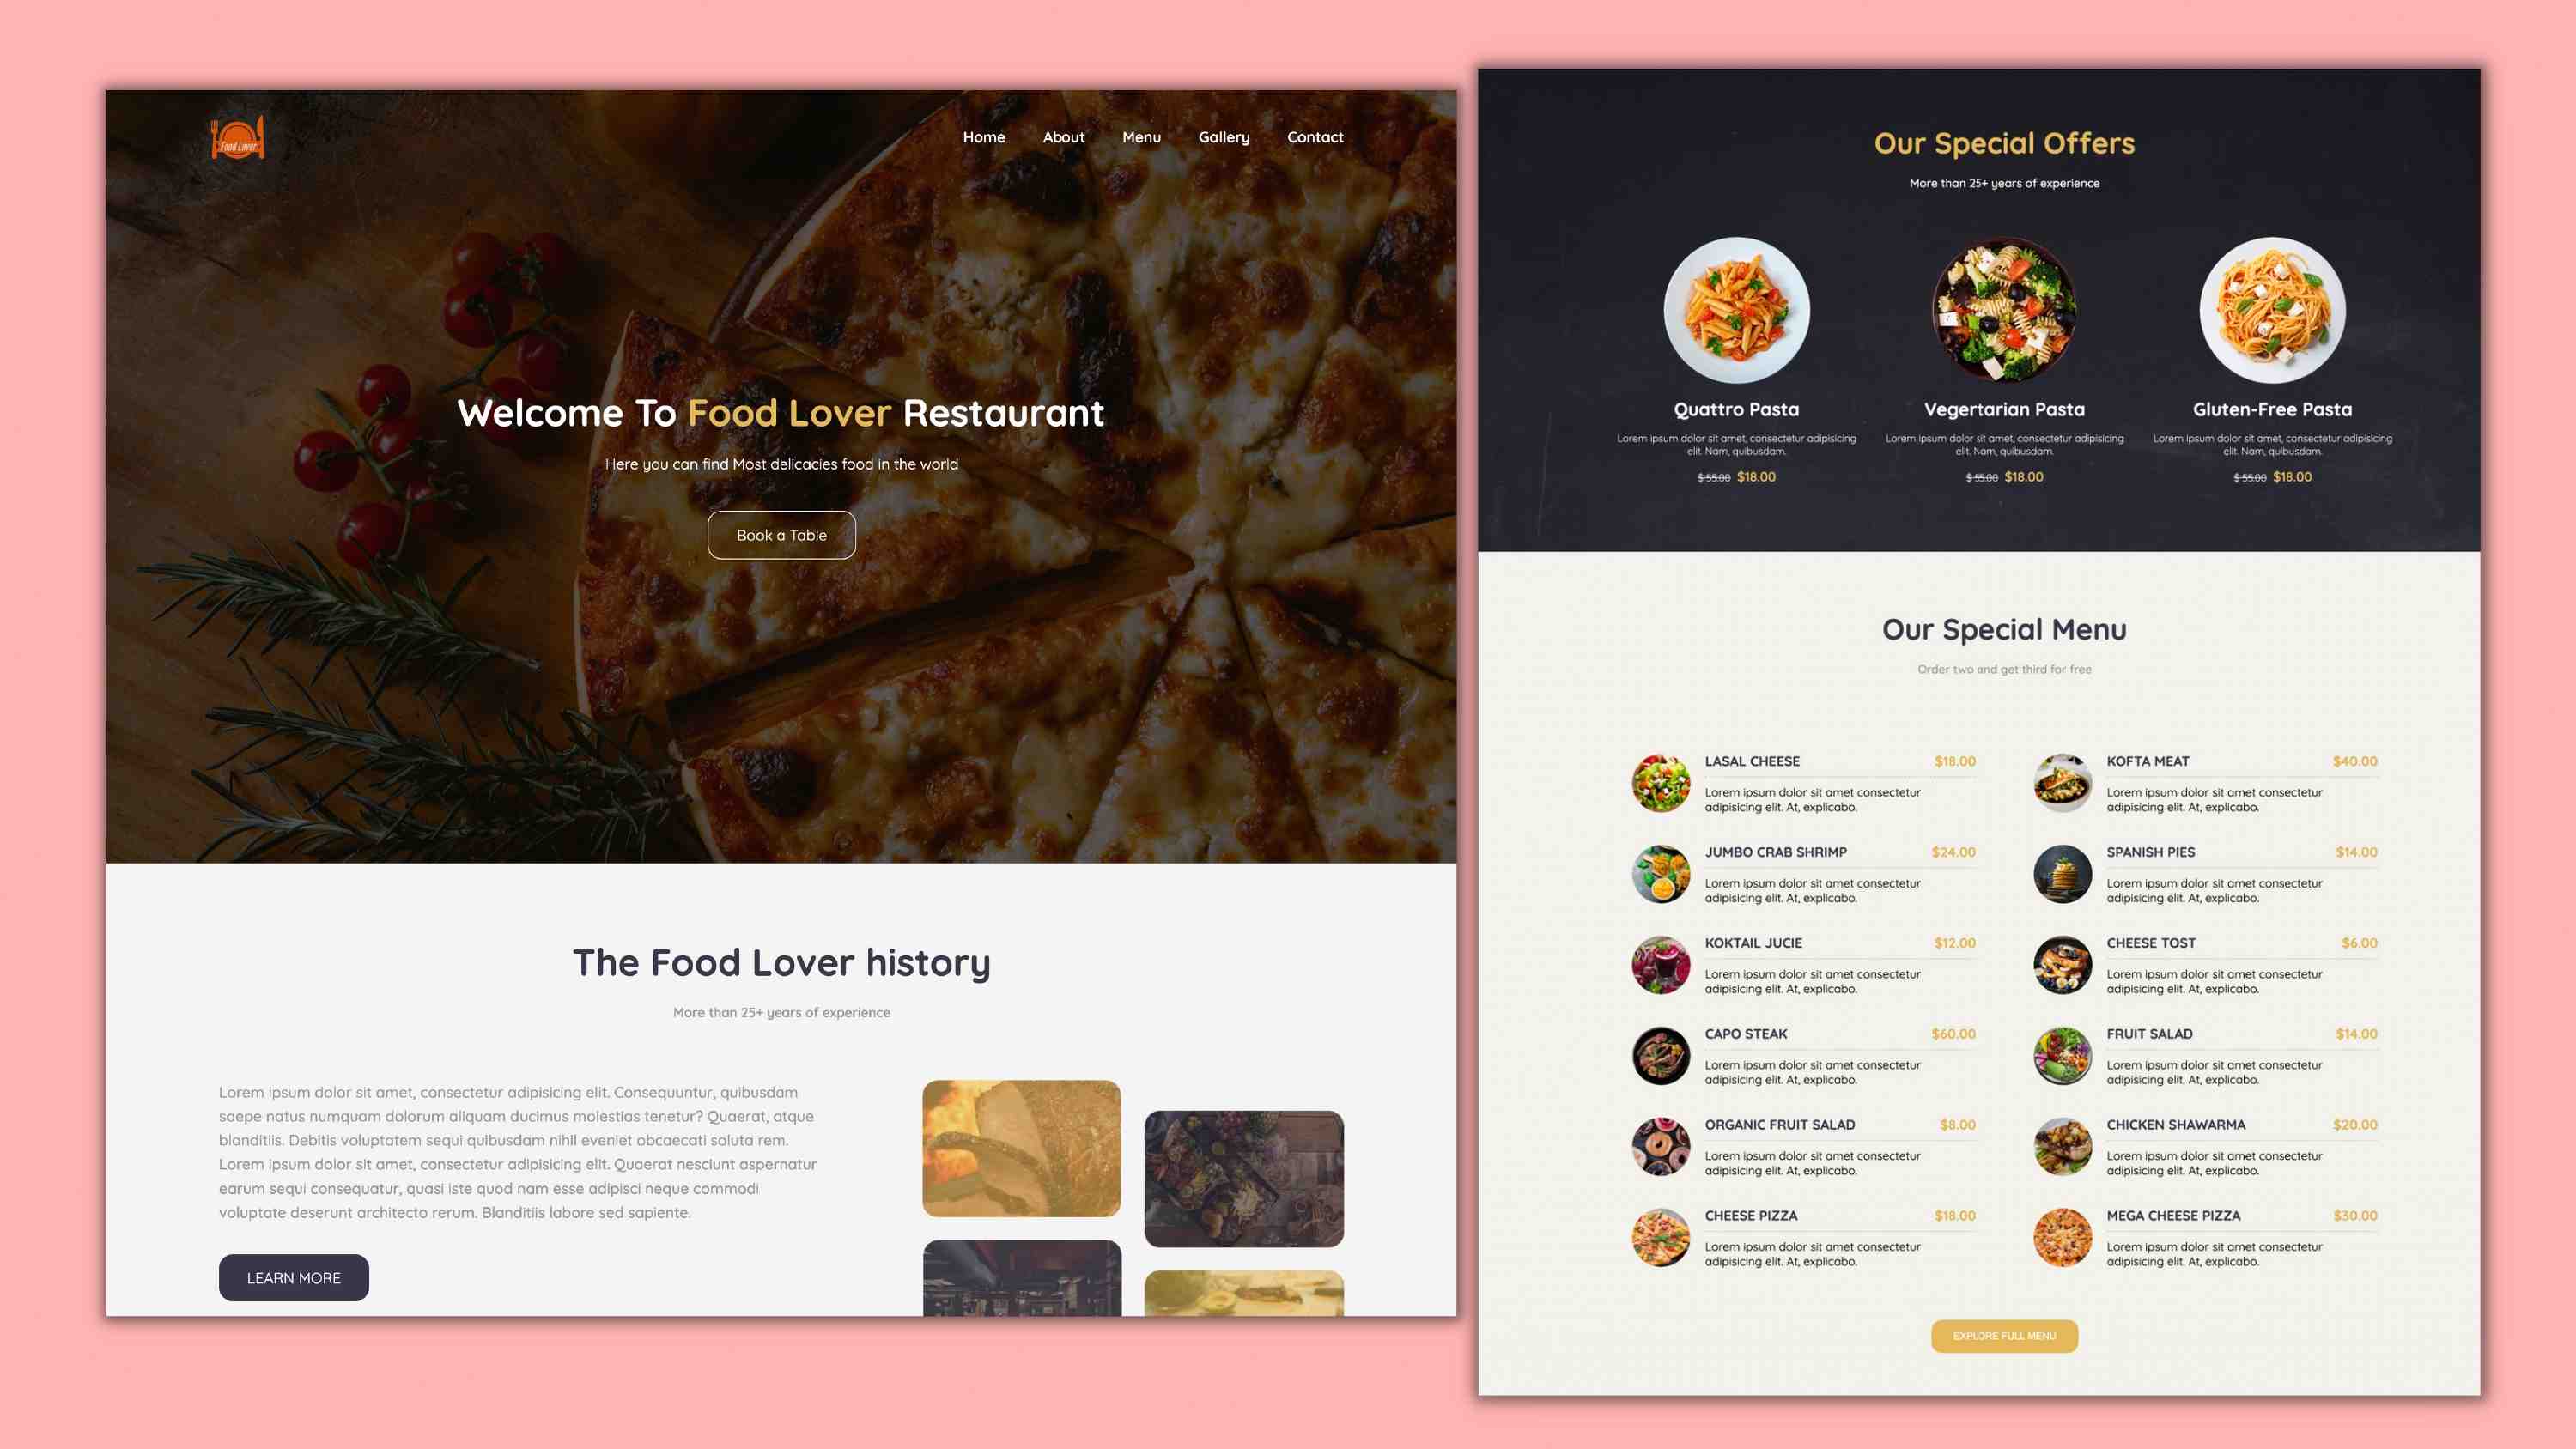 Restaurant-Website